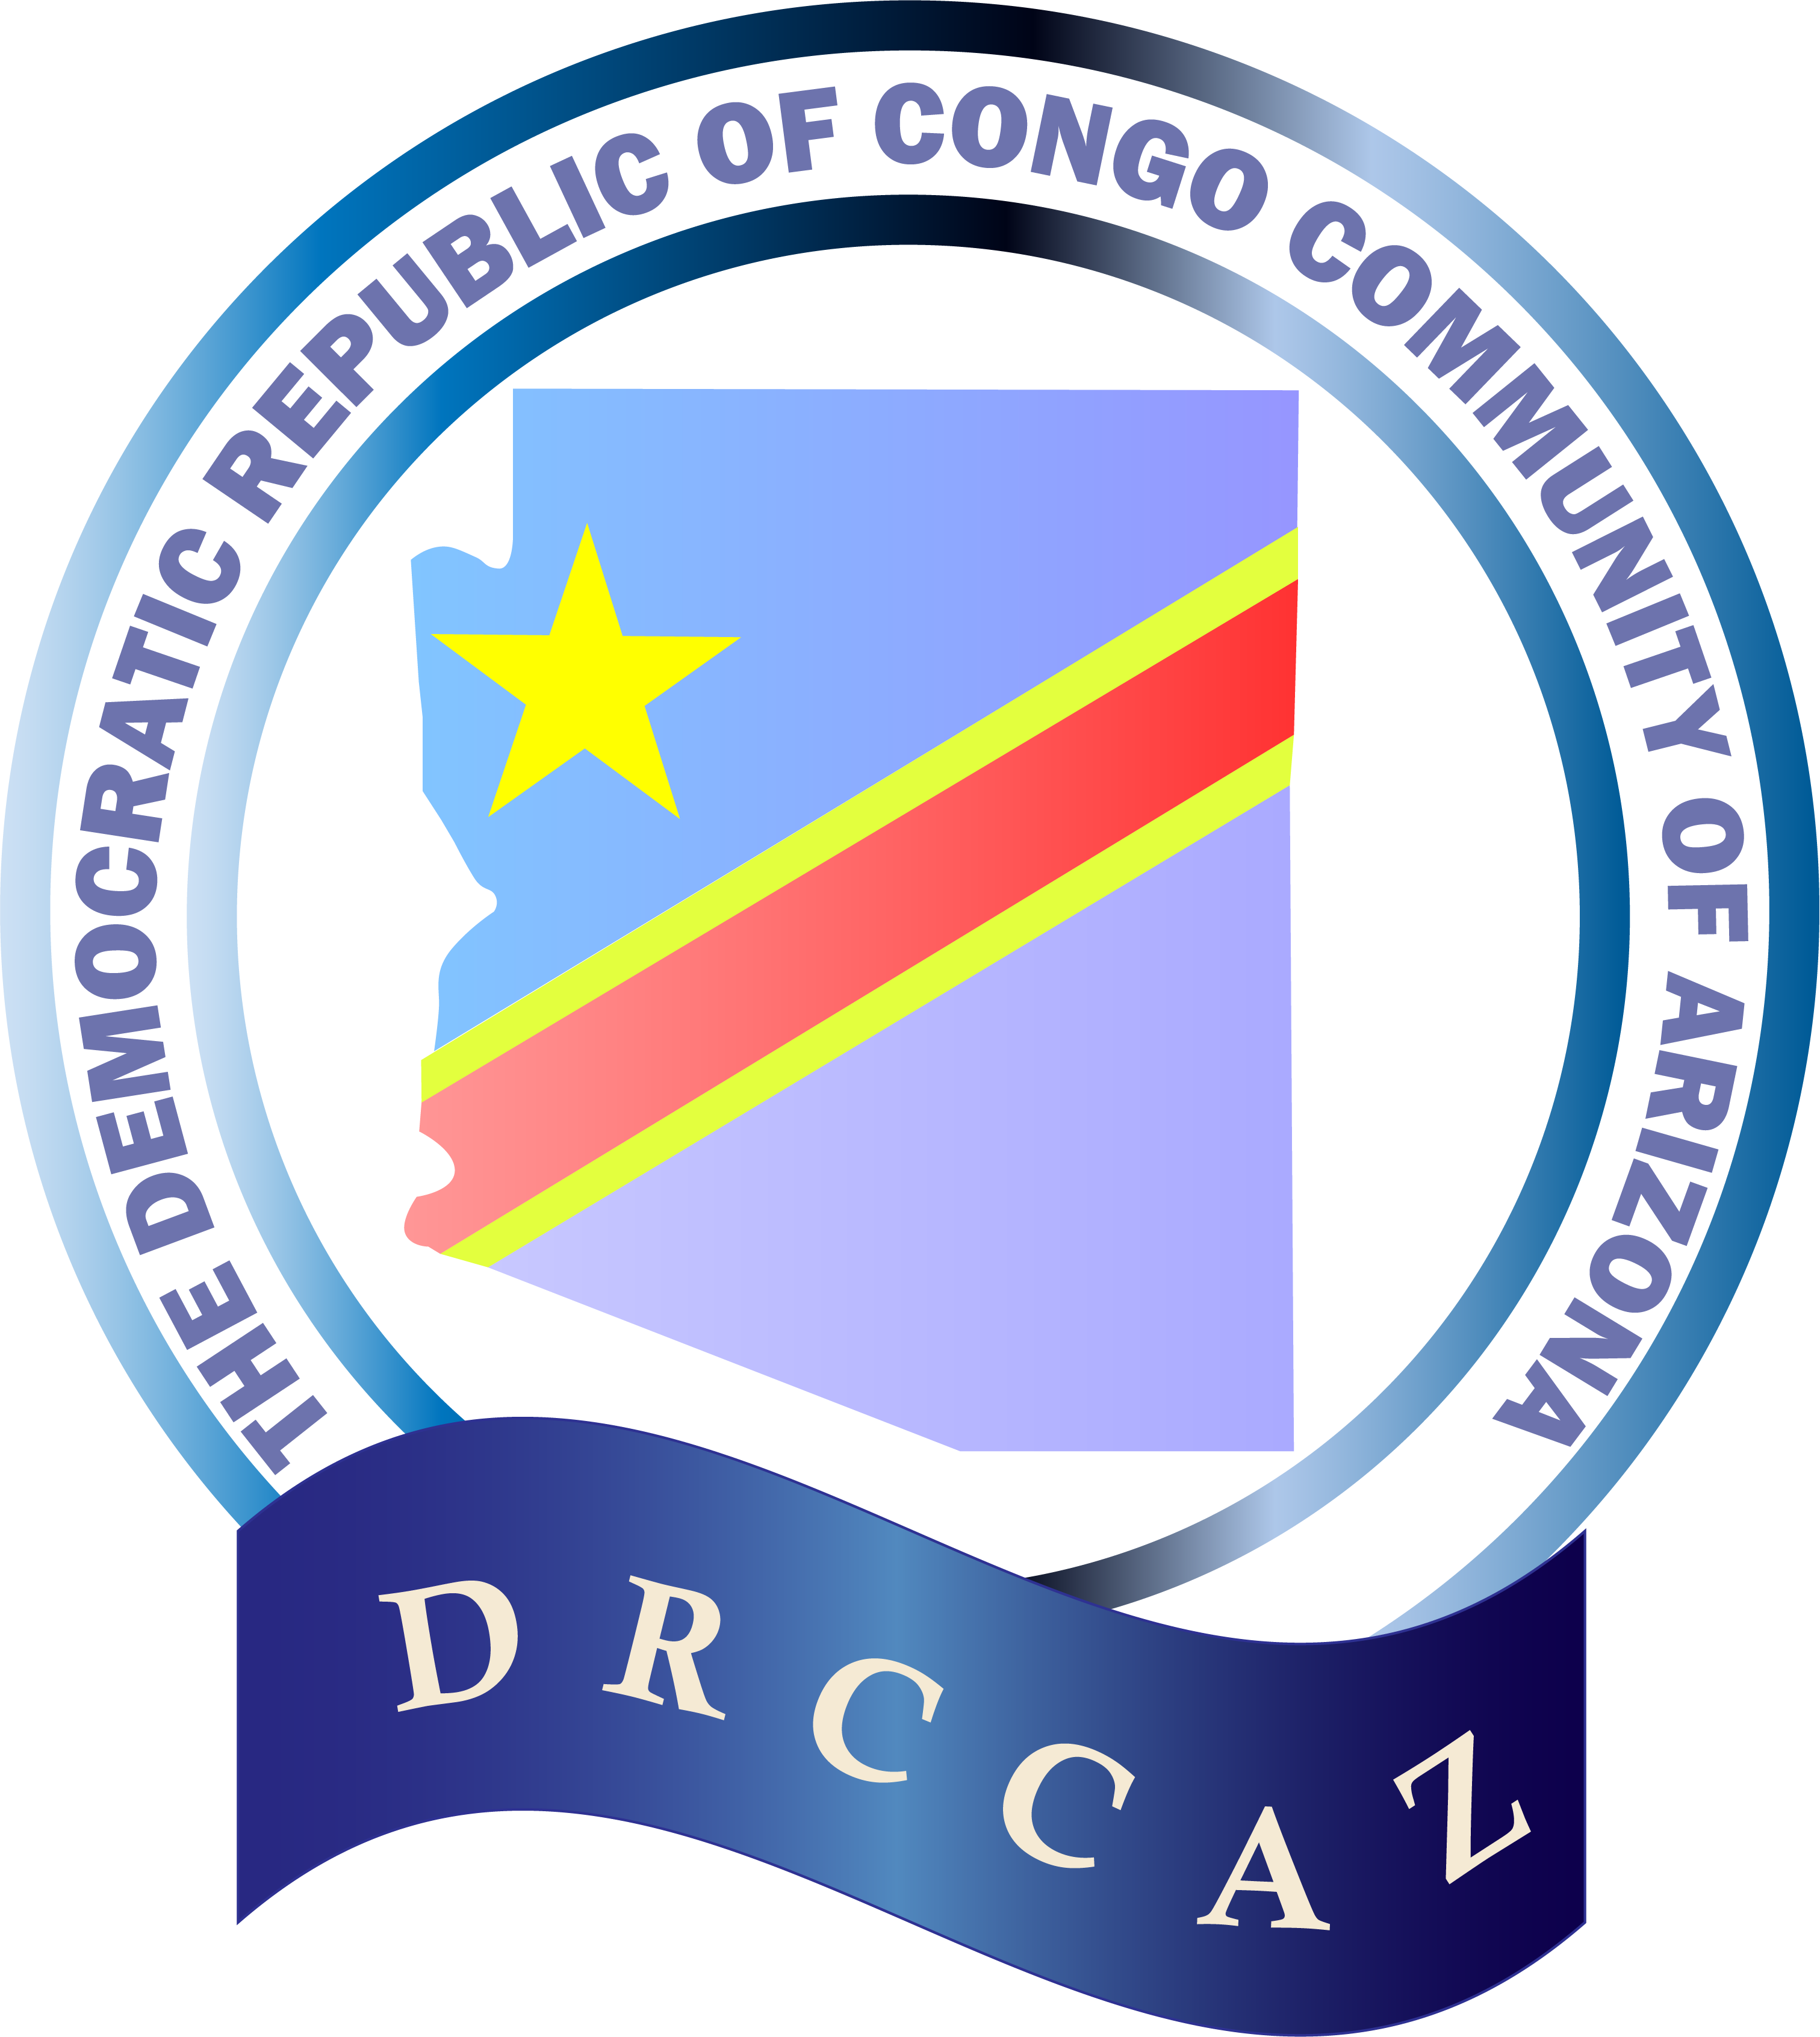 The Democratic Republic of Congo Community of Arizona